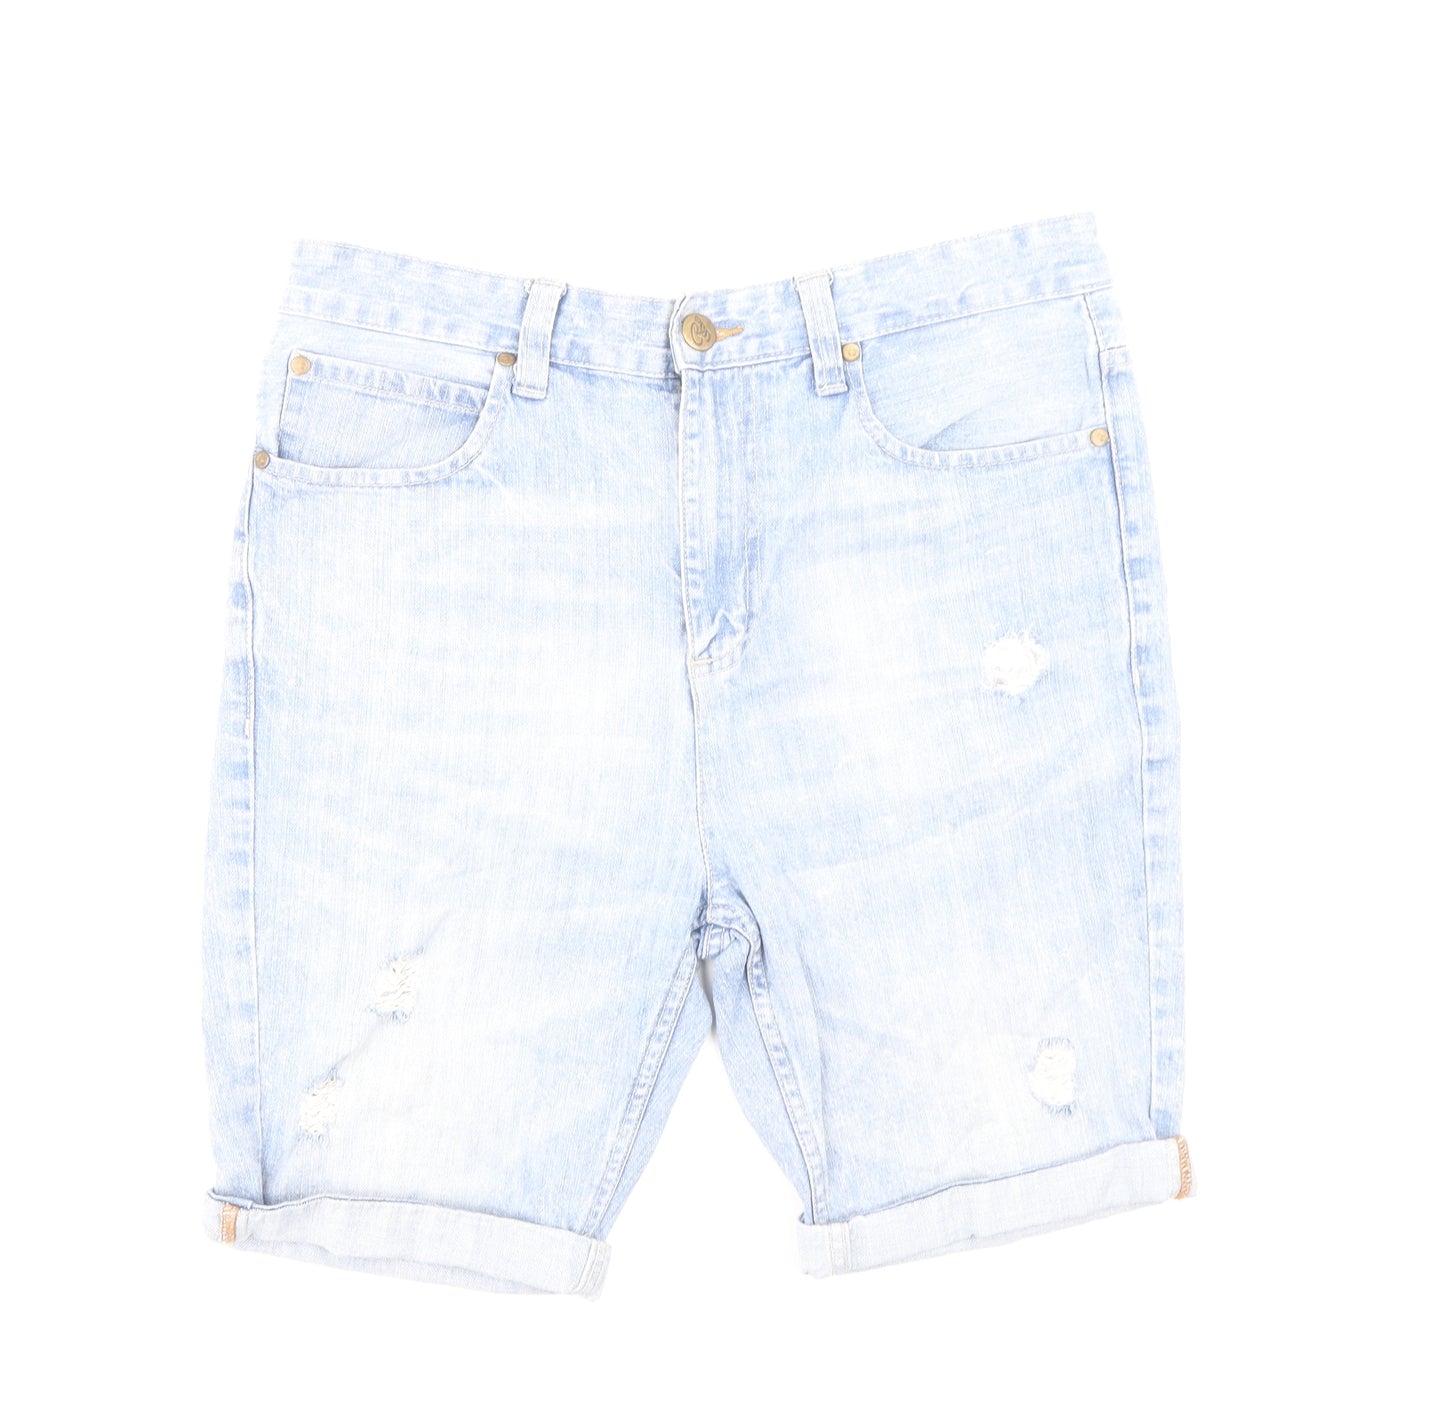 Crosshatch Mens Blue Cotton Bermuda Shorts Size 32 in L9 in Regular Zip